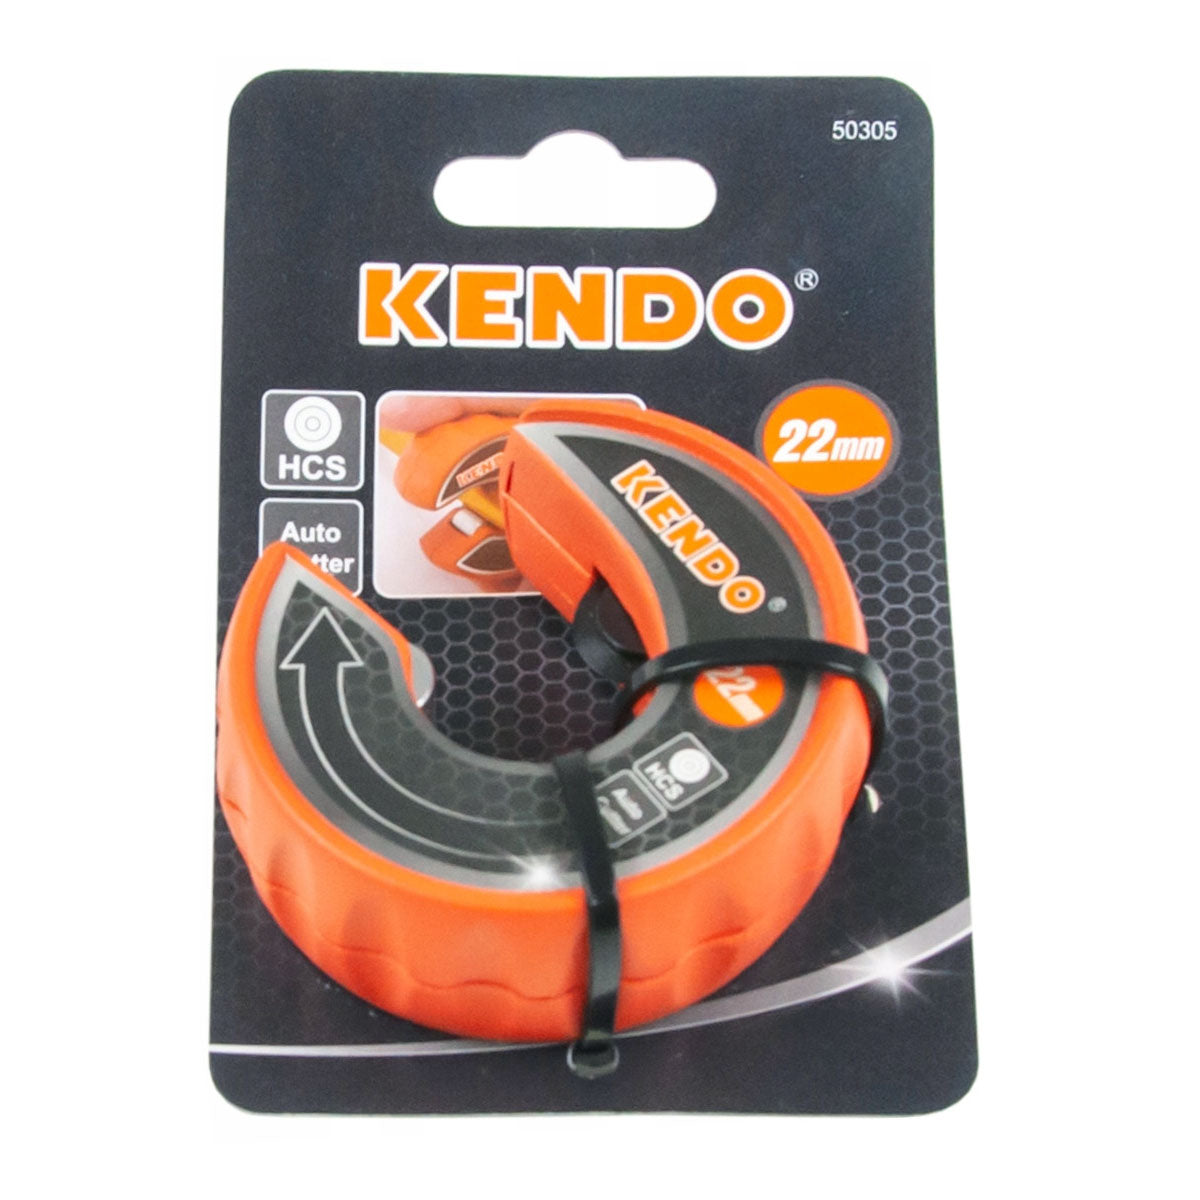 Kendo Auto Pipe Tube Cutter 22mm